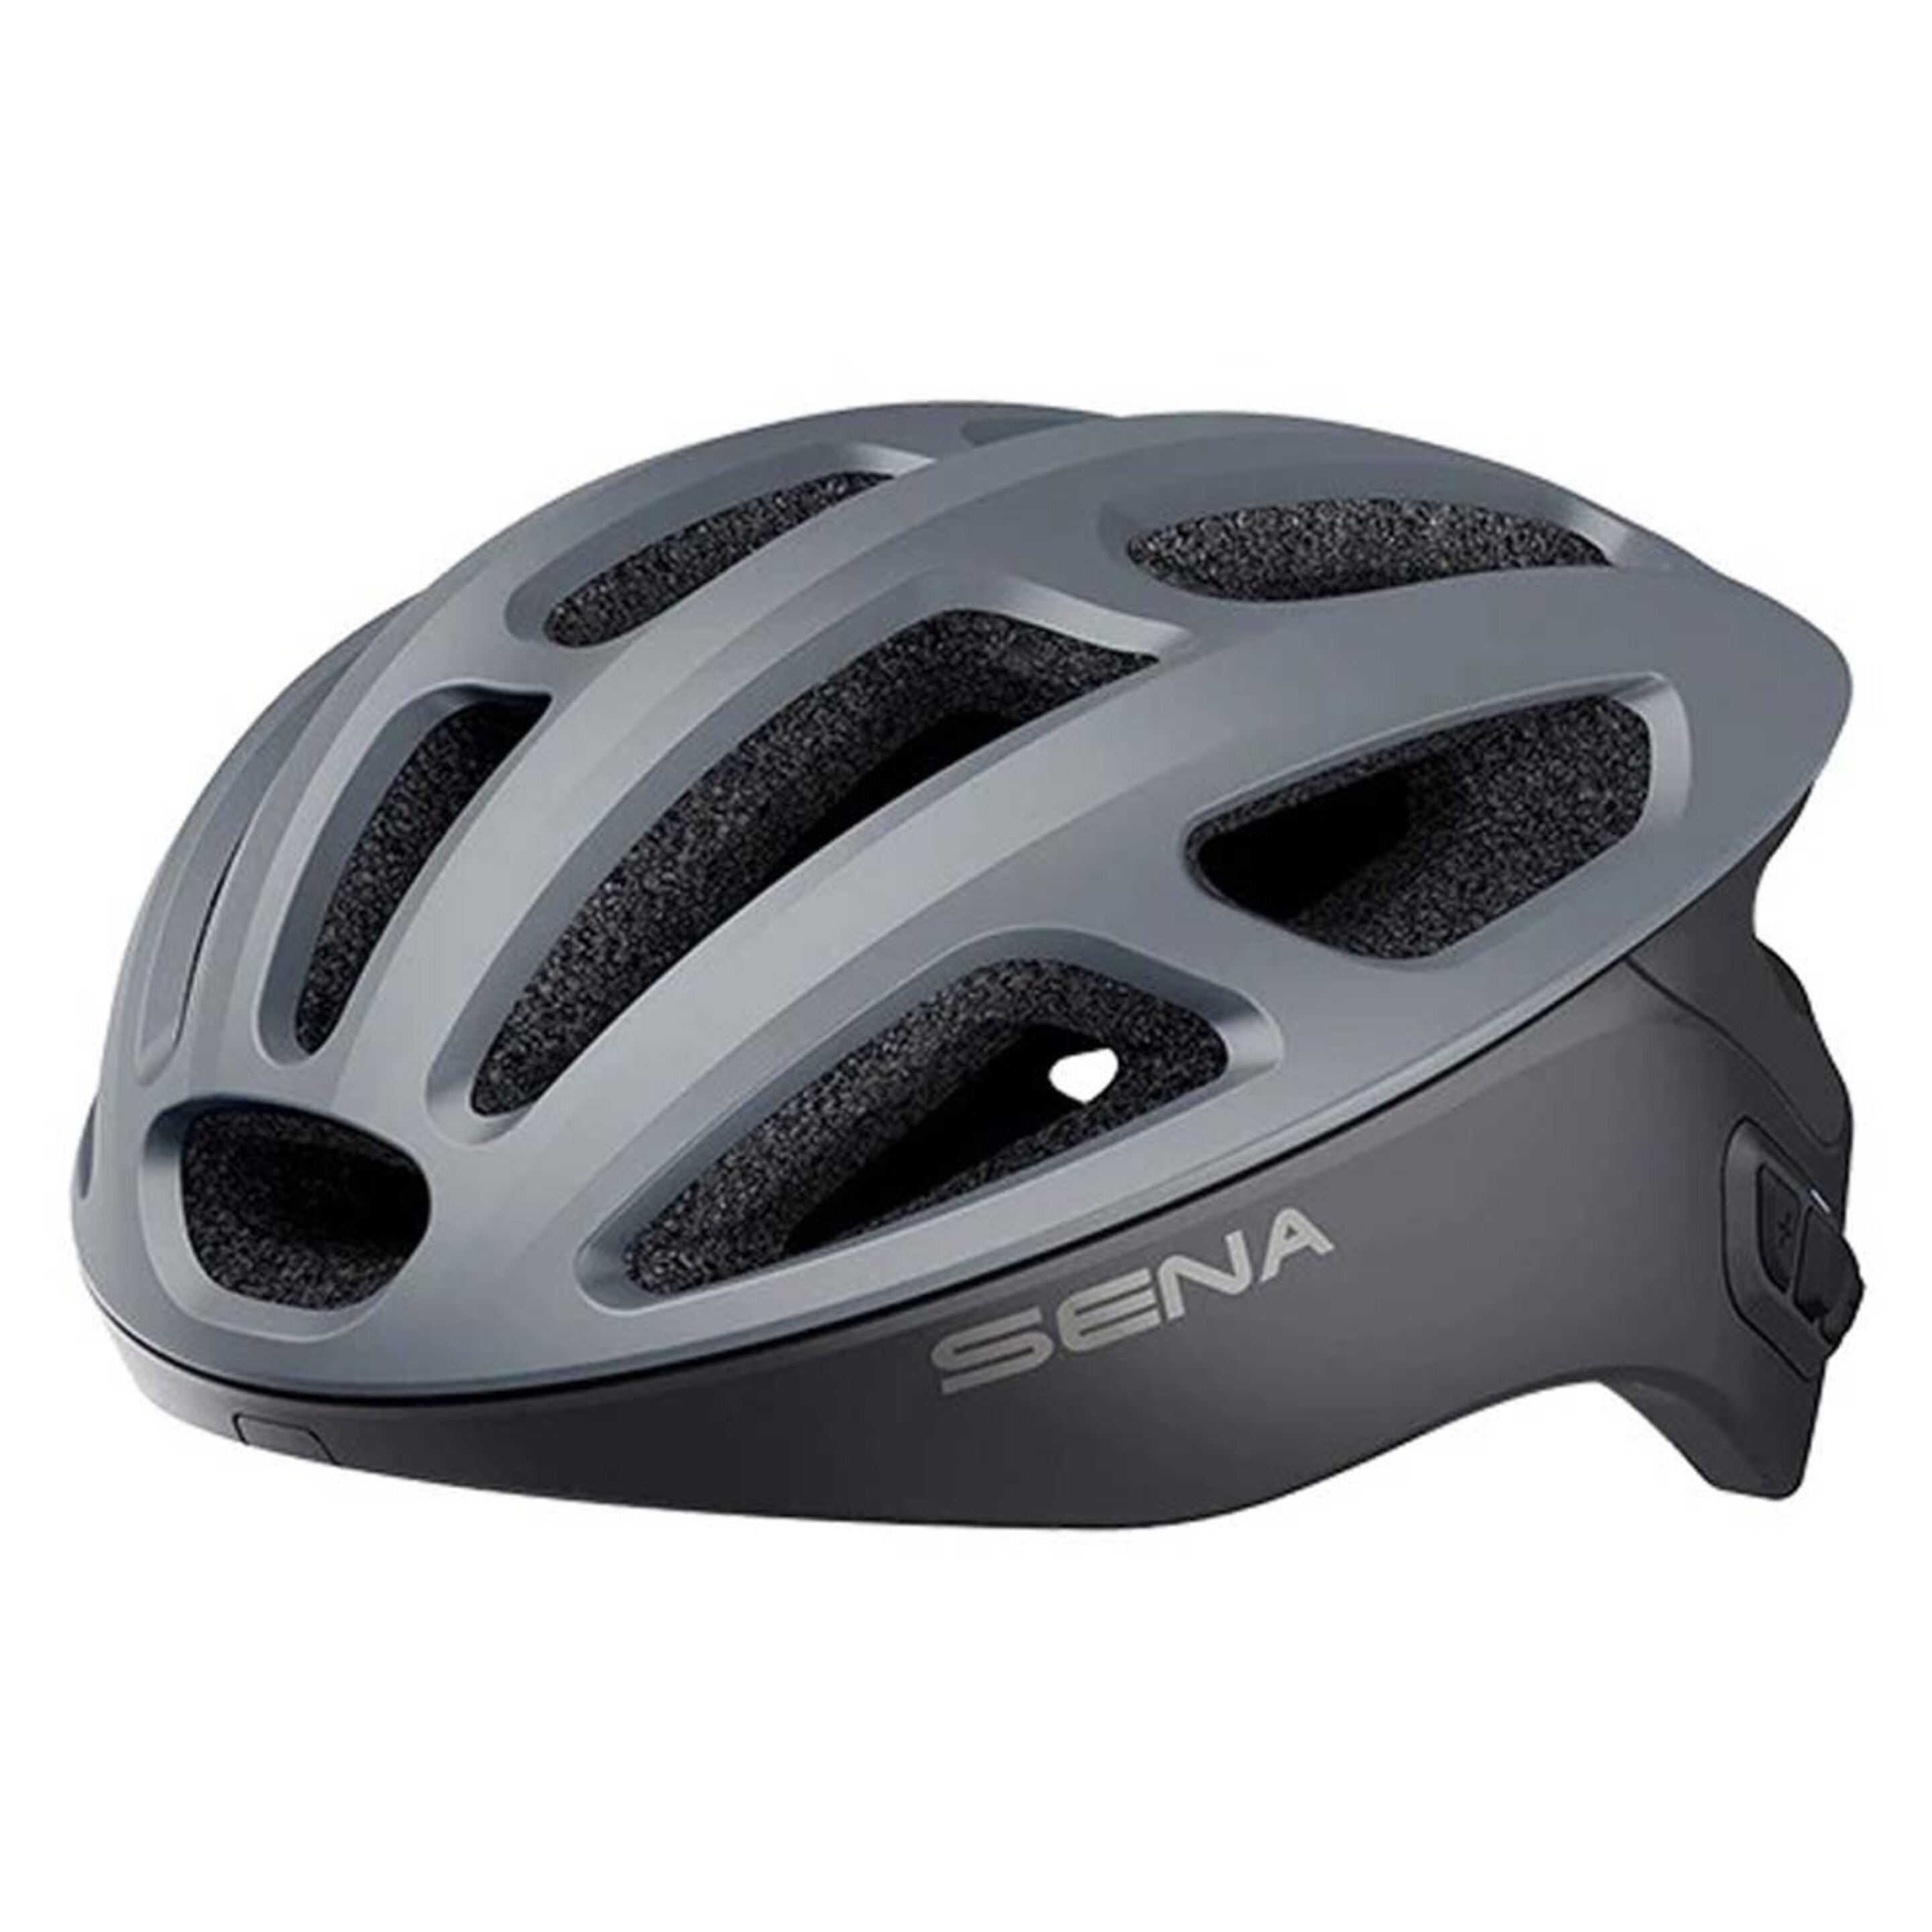 Casco Ciclismo Sena R1 Bluetooth - El Smart Helmet R1 Con Bluetooth.  MKP